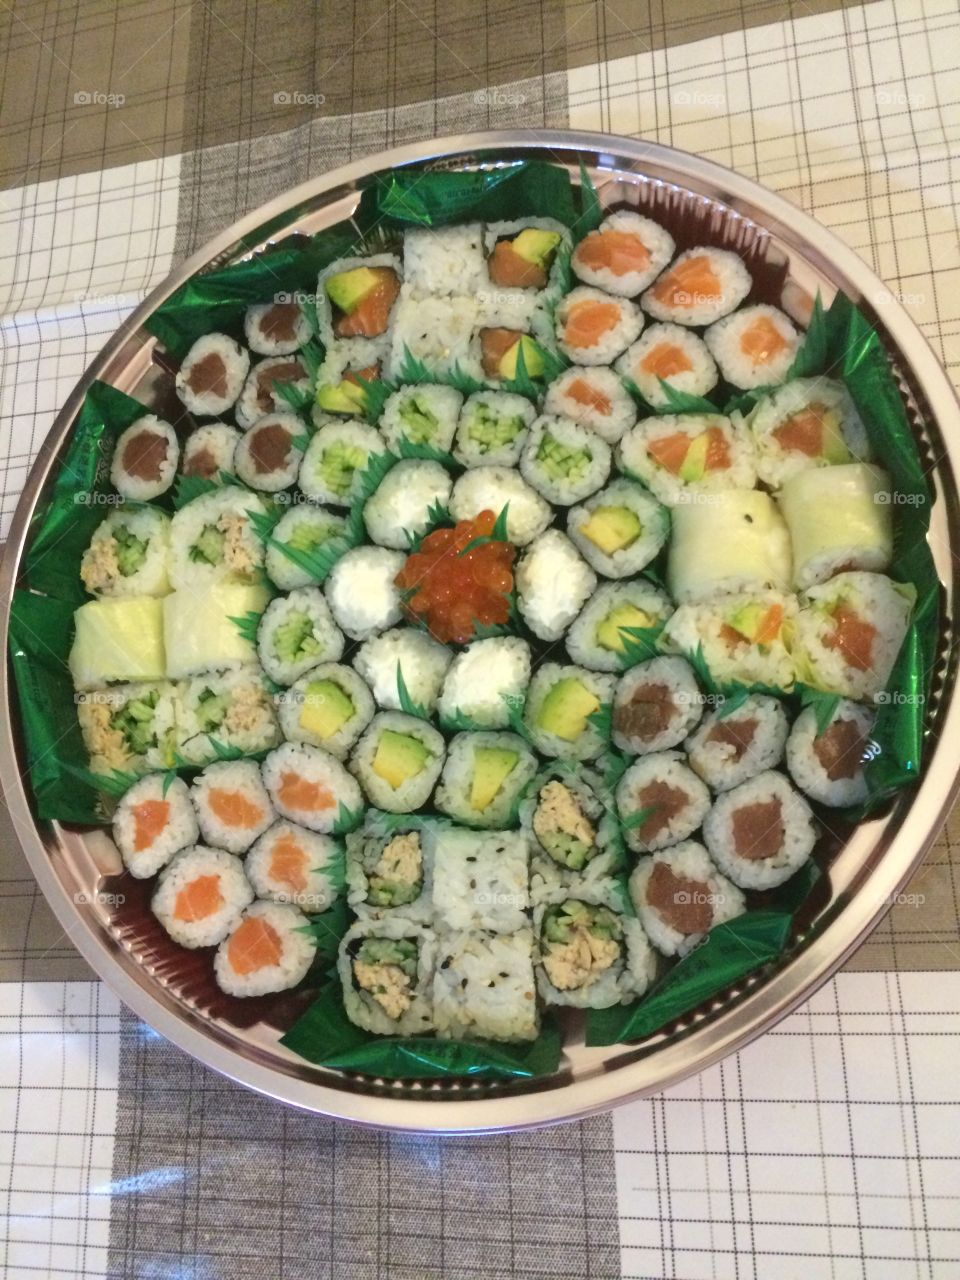 Sushi Platter. Dinner for seven! We had it last night!